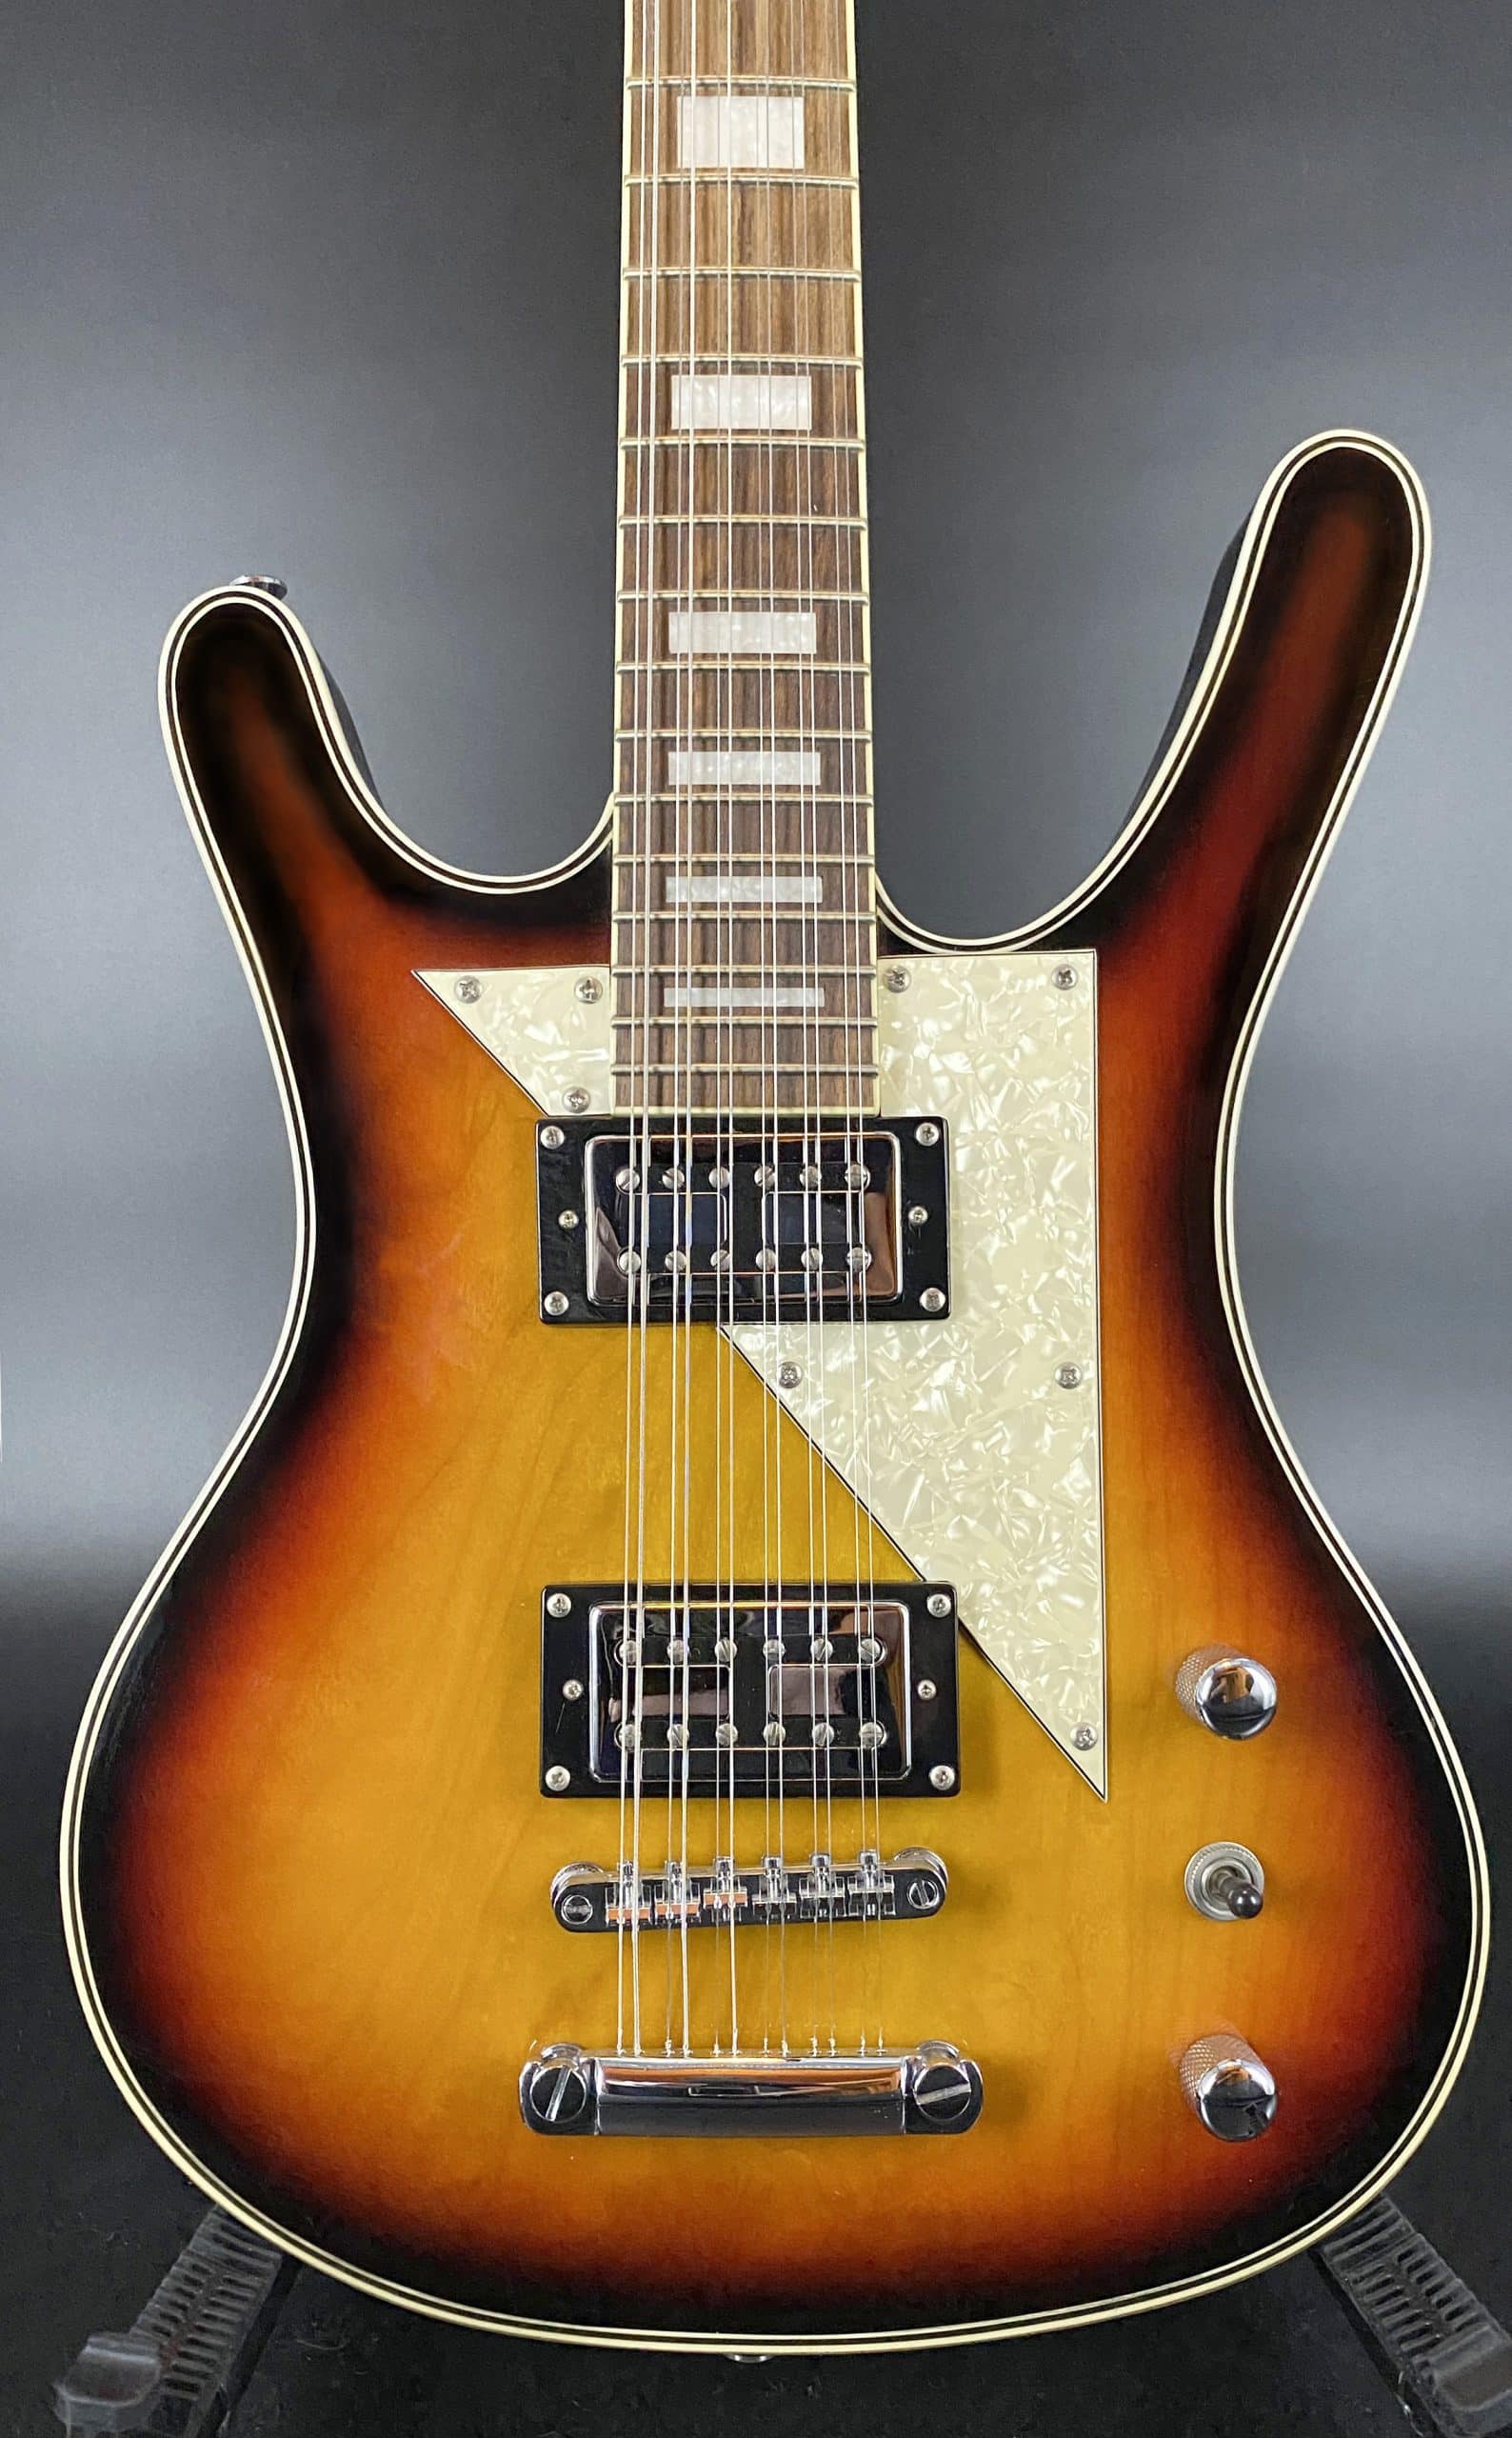 Musicvox MI-5 12-String Electric Guitar